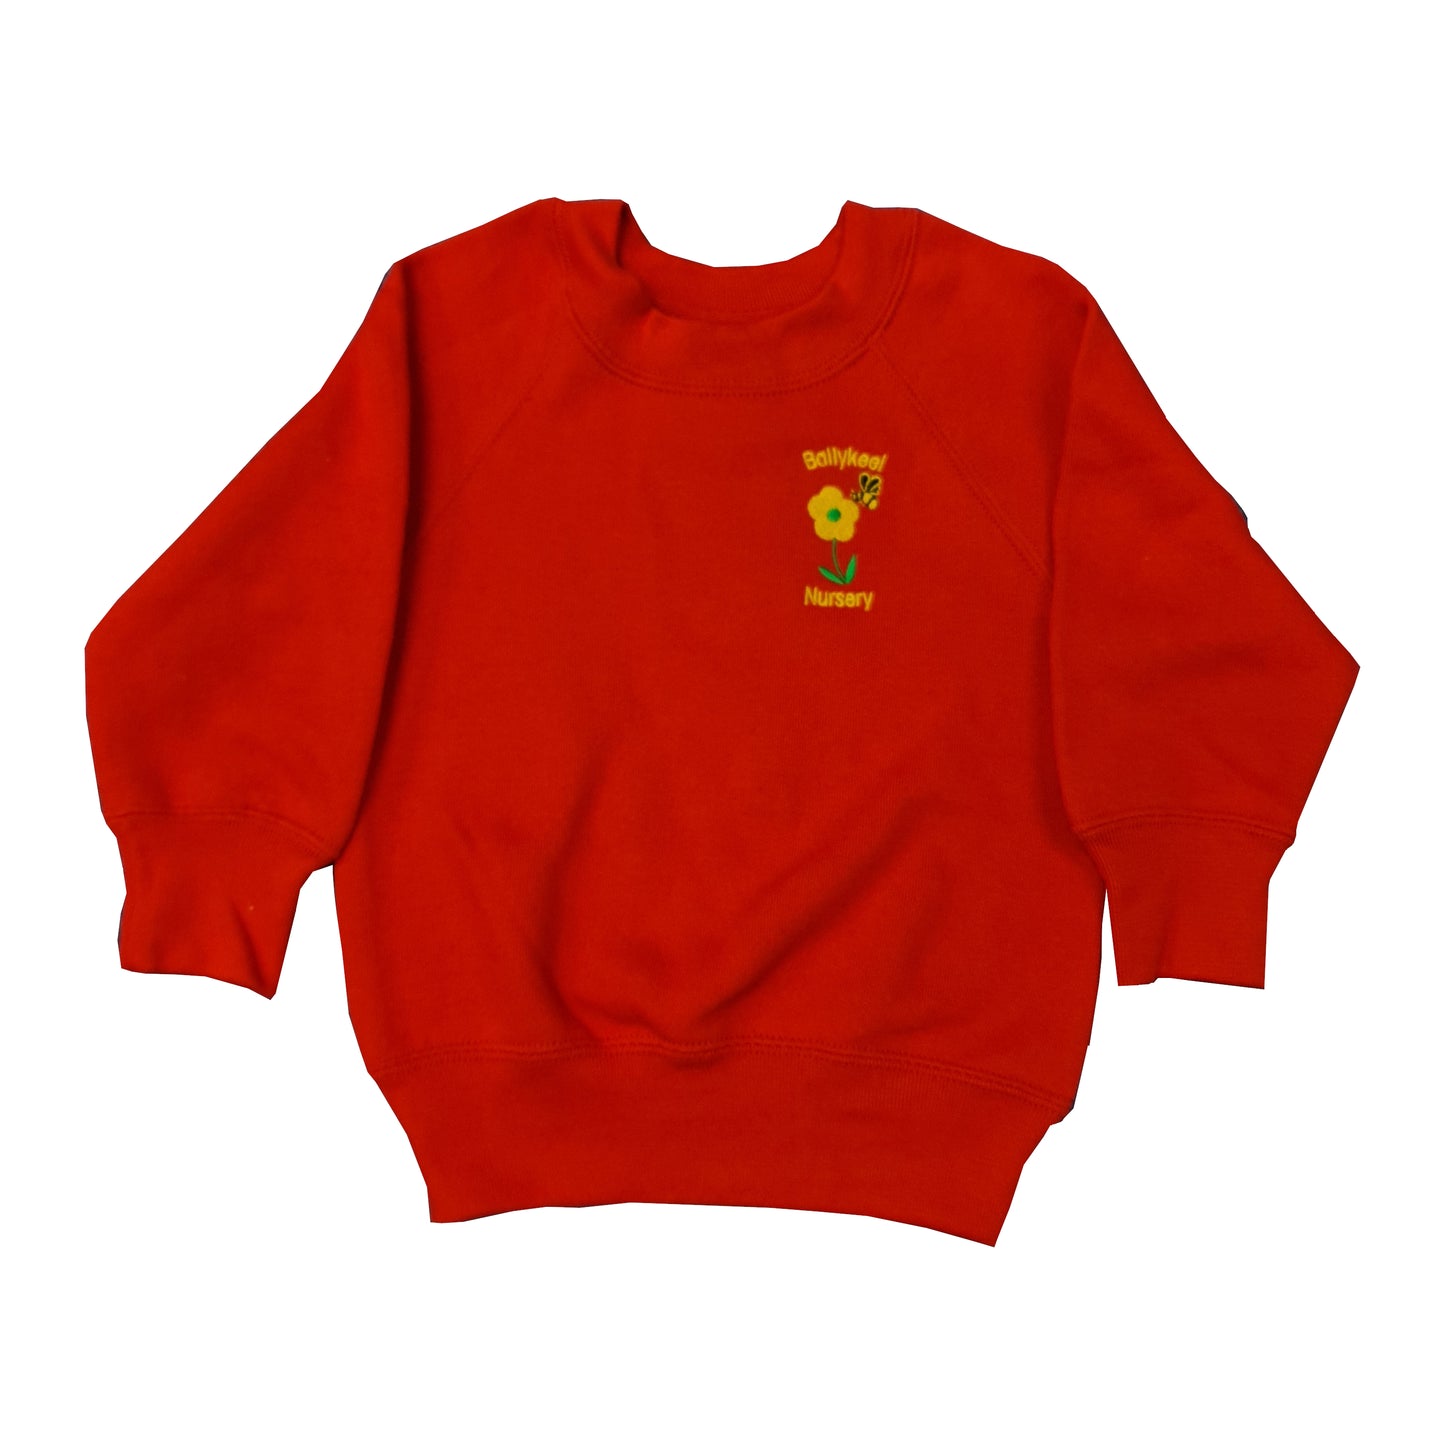 Ballykeel Nursery School Sweatshirt